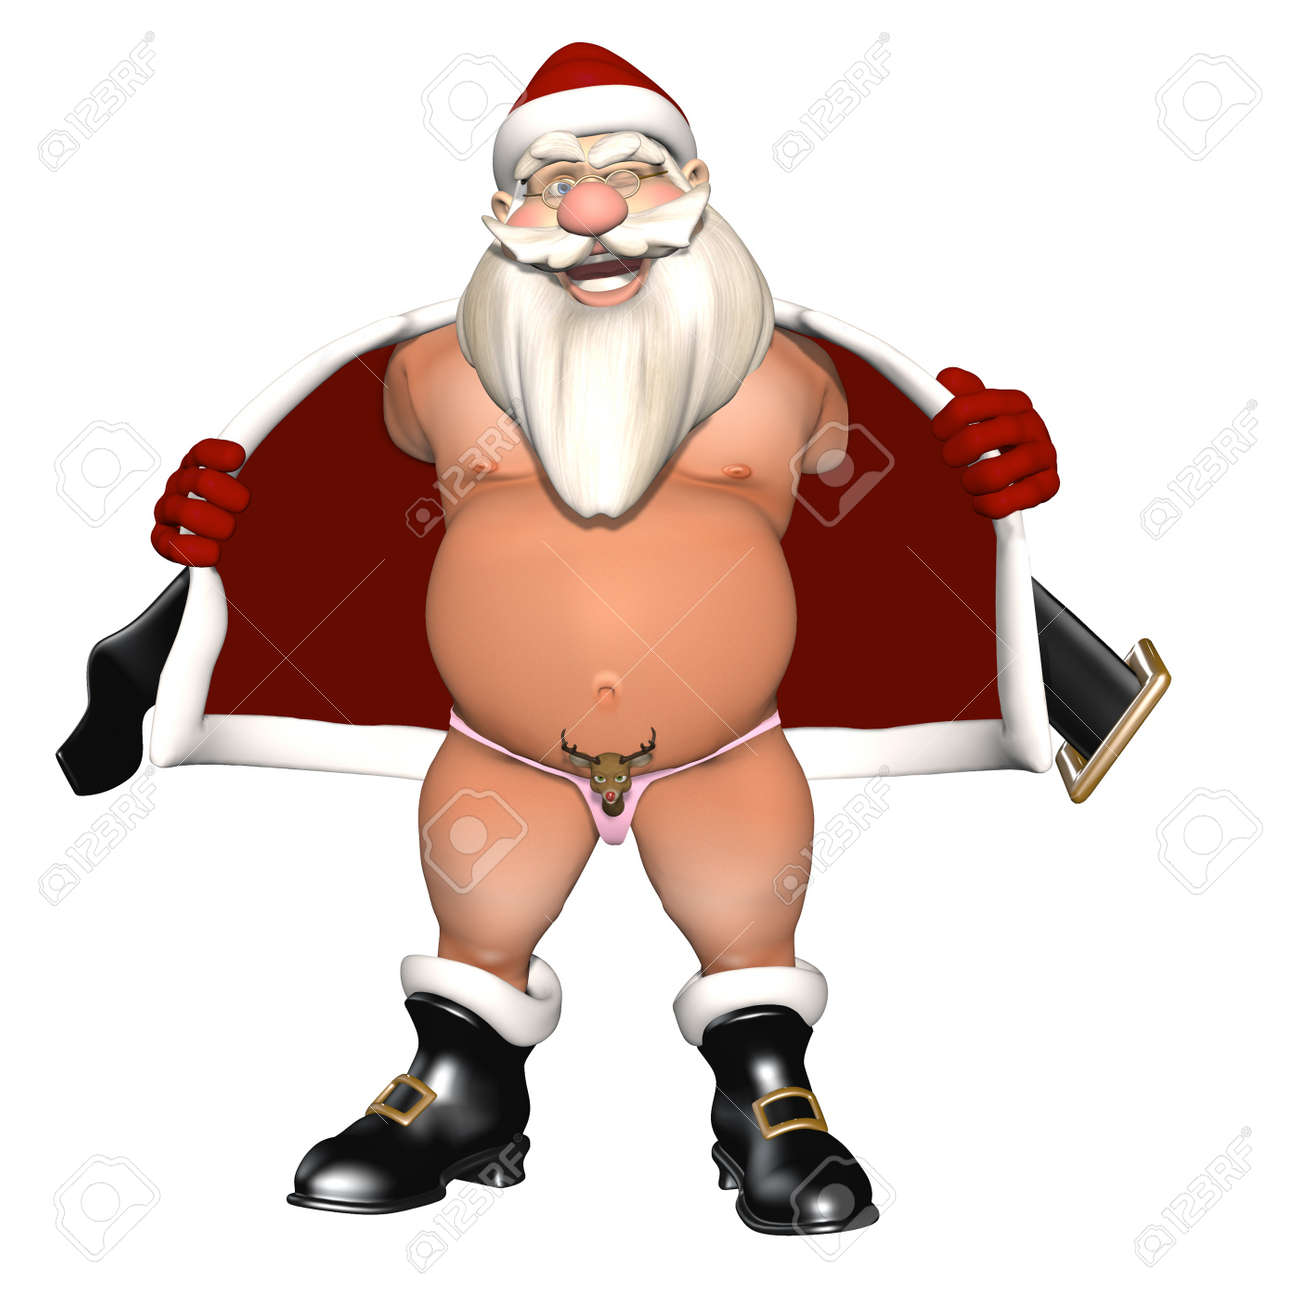 15889815-Santa-Flashing-in-a-Reindeer-Thong-Santa-opening-his-coat-to-flash-Not-wearing-pants-nether-region-h-Stock-Photo.jpg